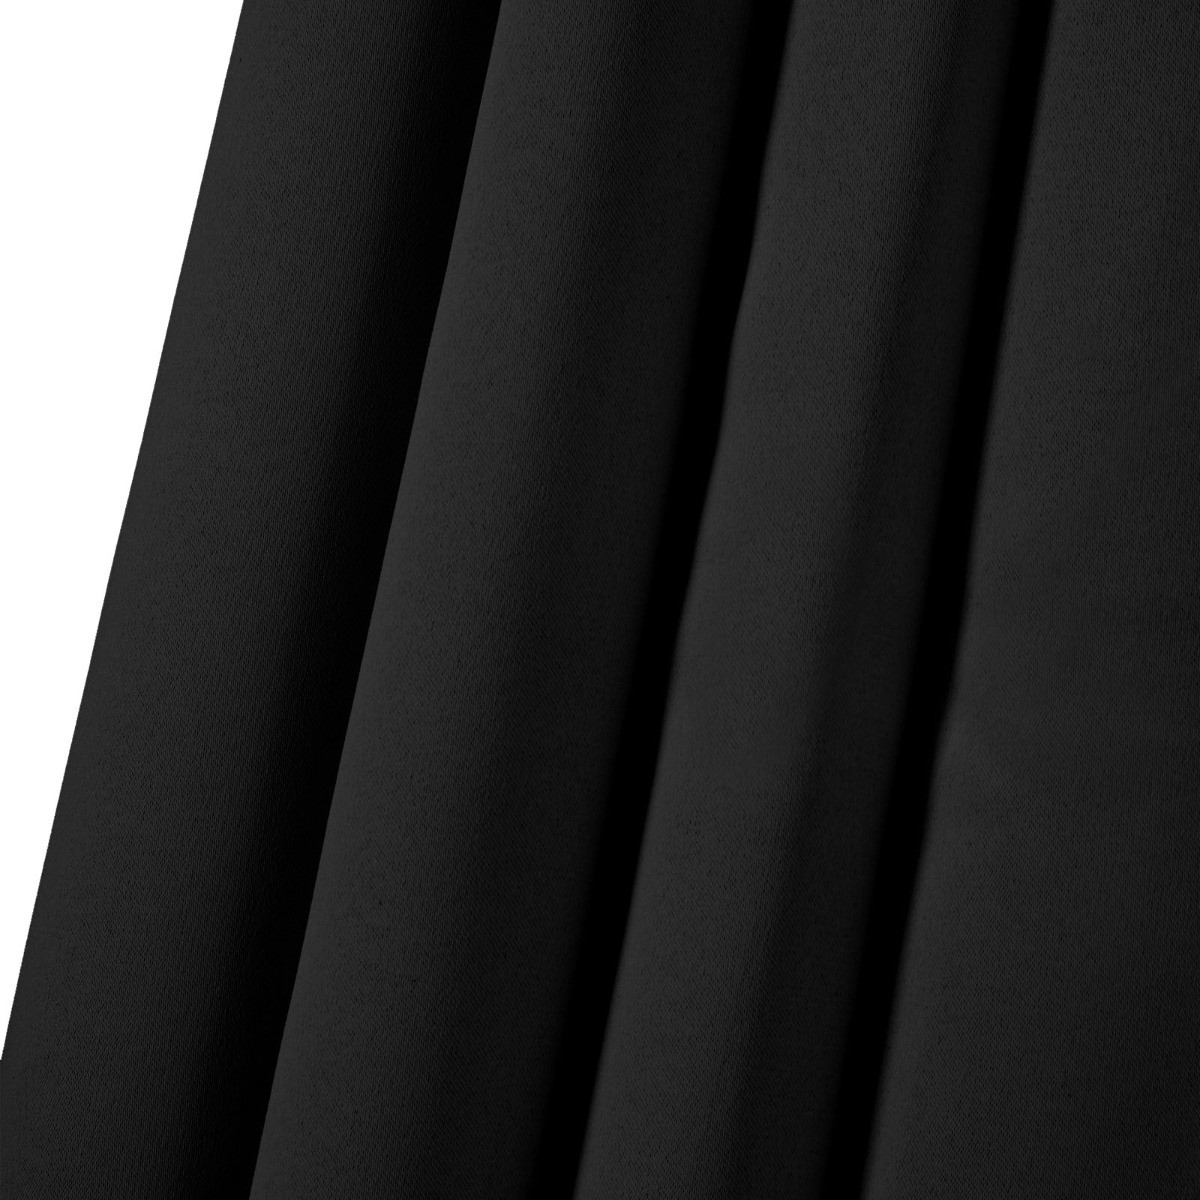 Dreamscene Pencil Pleat Thermal Blackout Curtains - Black, 66" x 90">